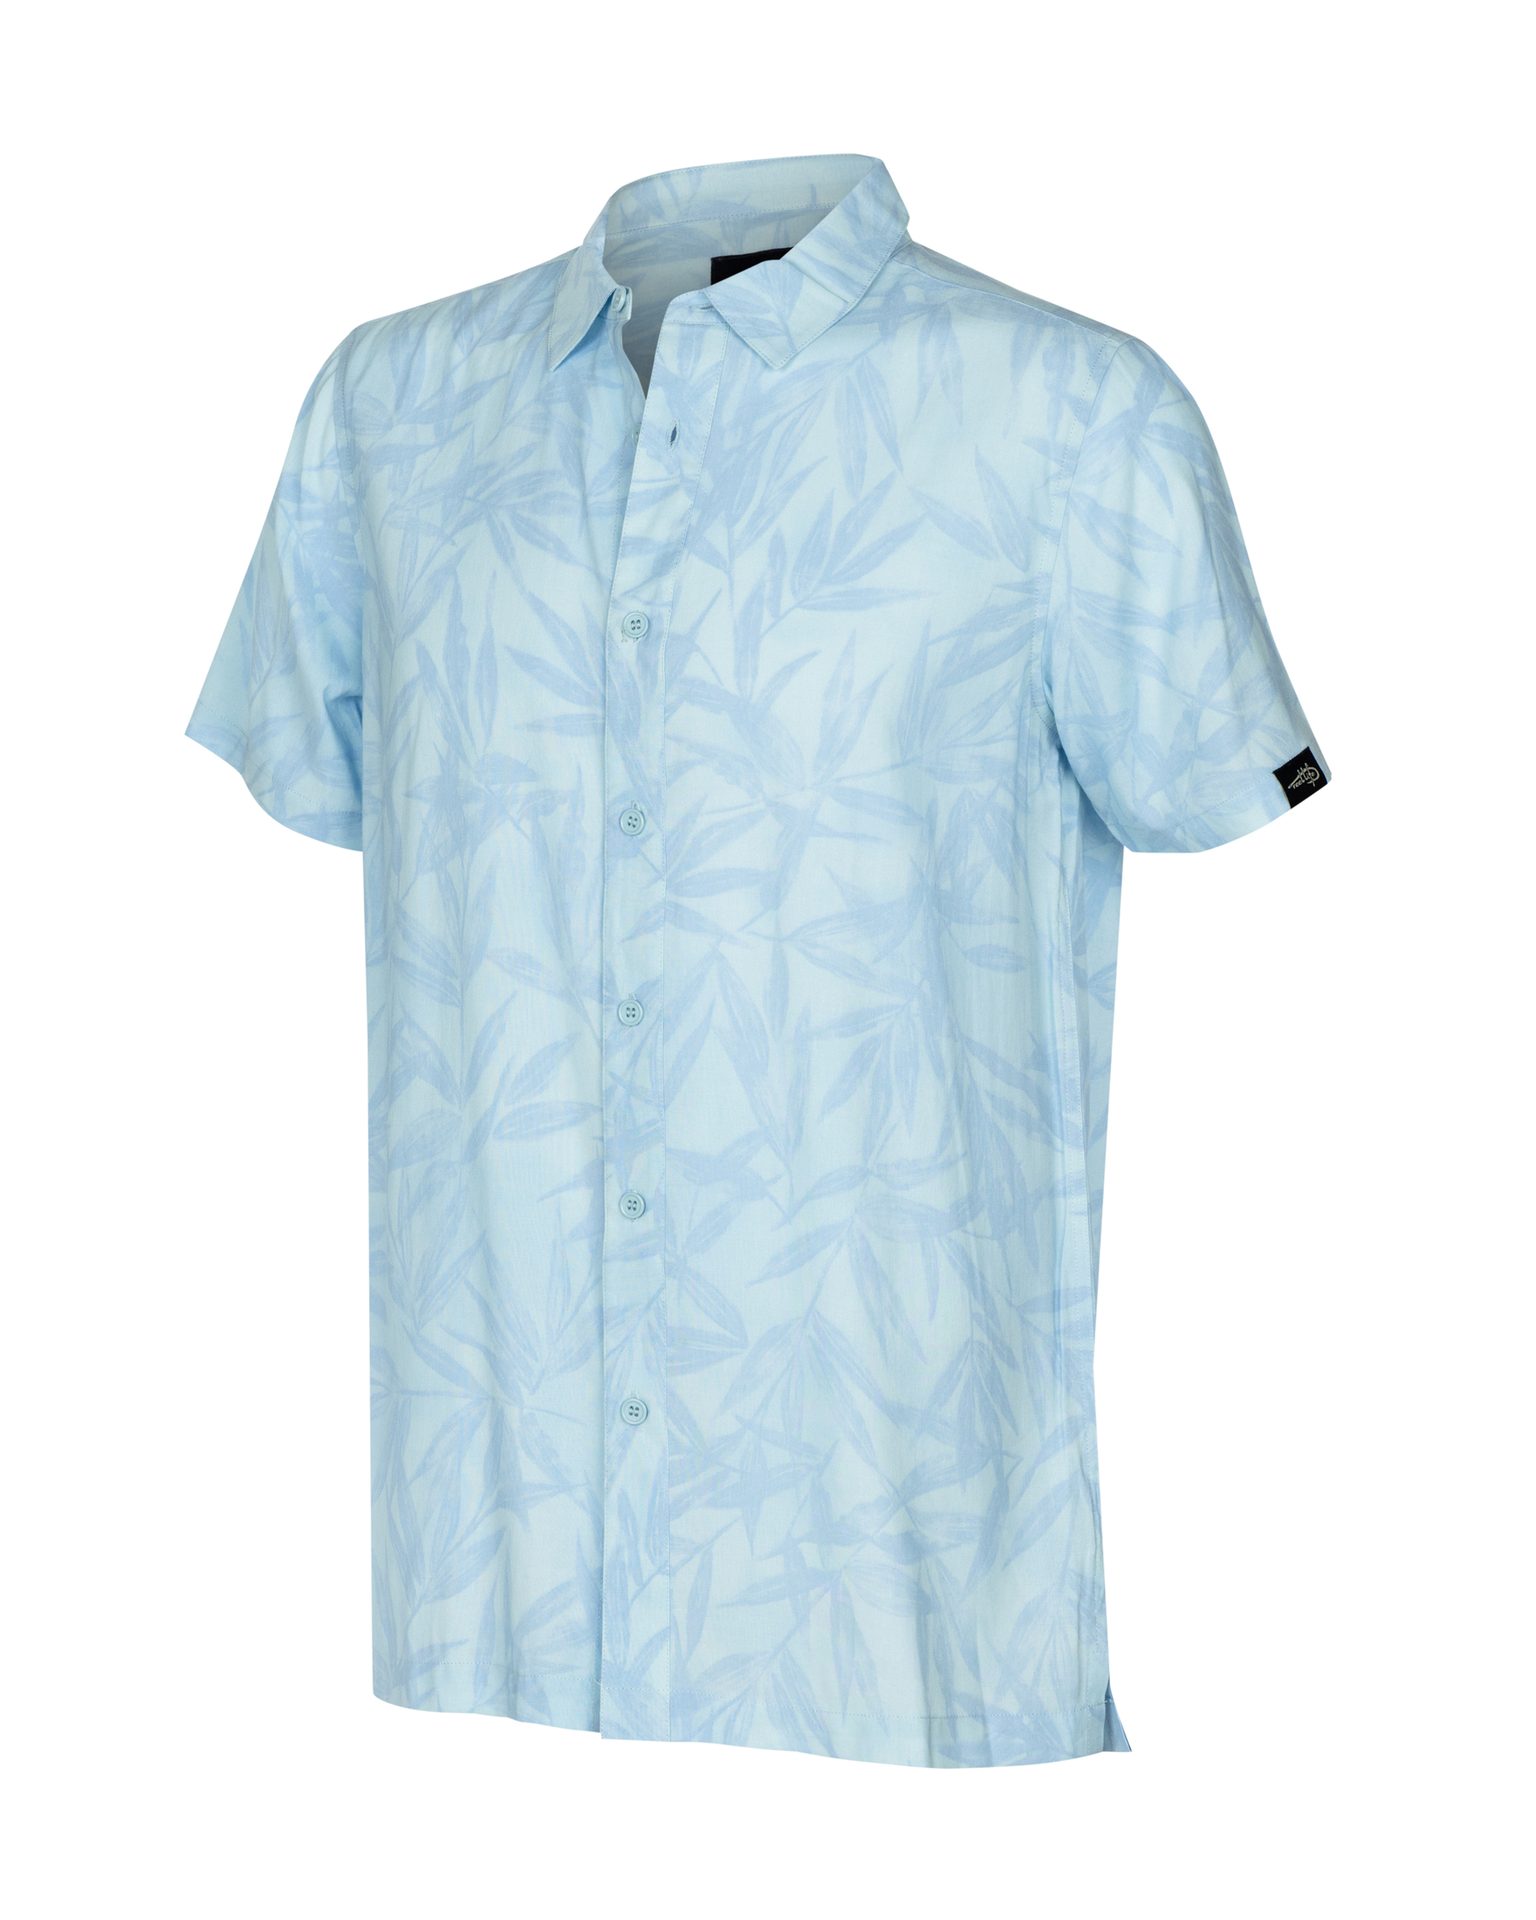 Ghost Mannequin, Dress shirt, Product, Sleeve, Collar, Aqua